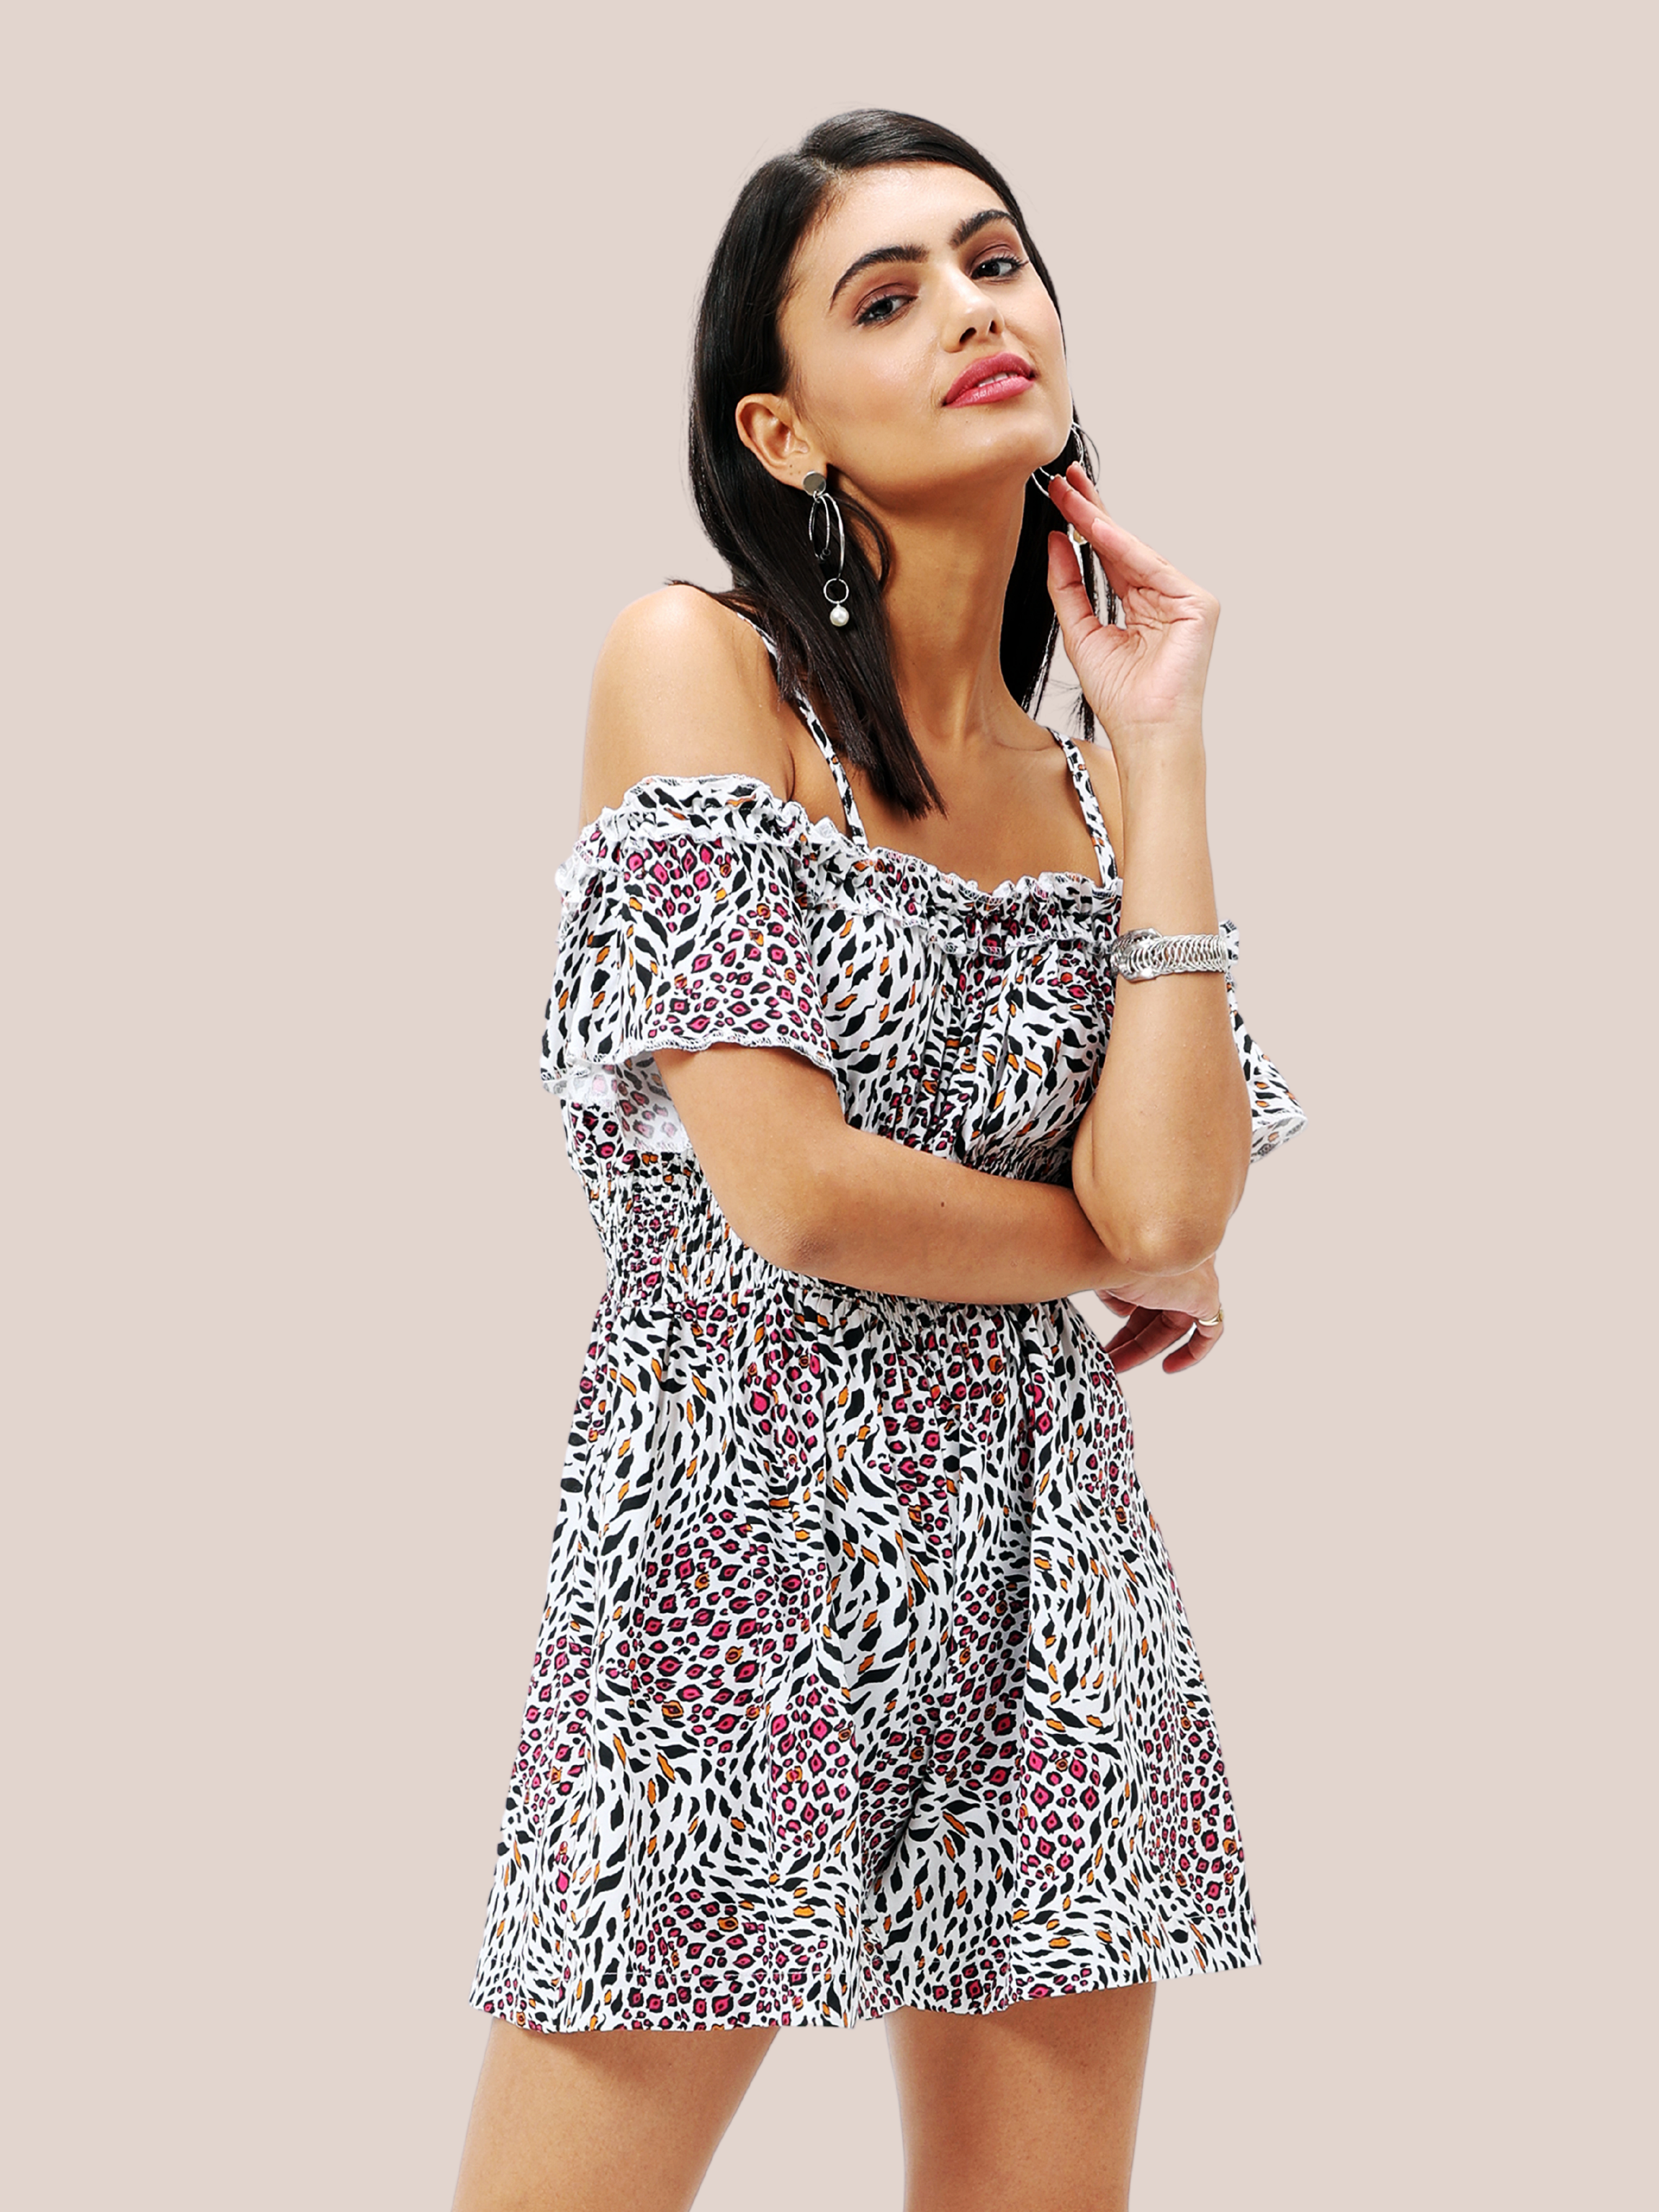 Fashionista - Radhella Women's Elegant Printed Playsuit